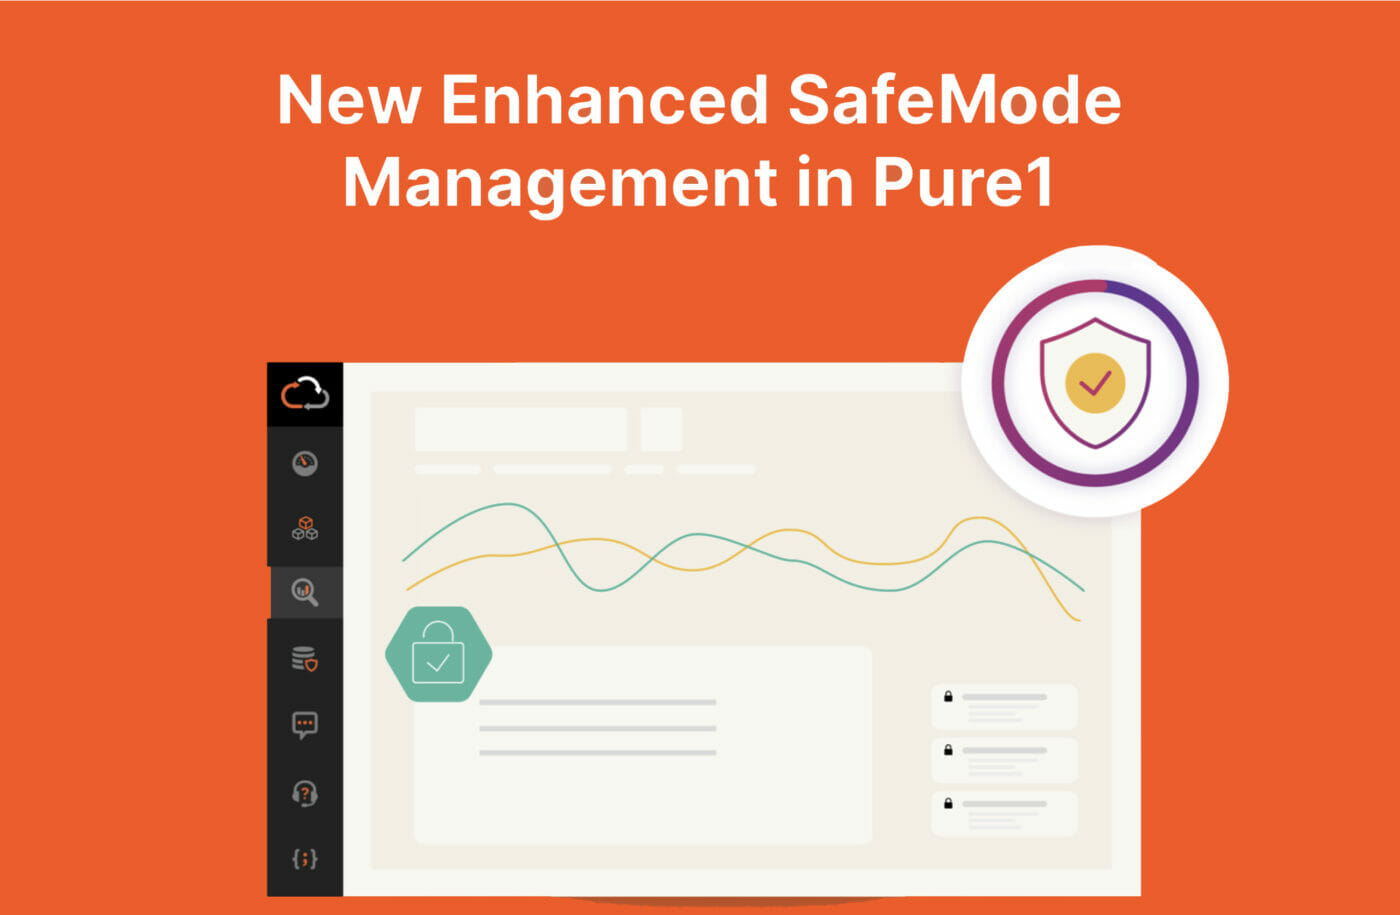 SafeMode Management